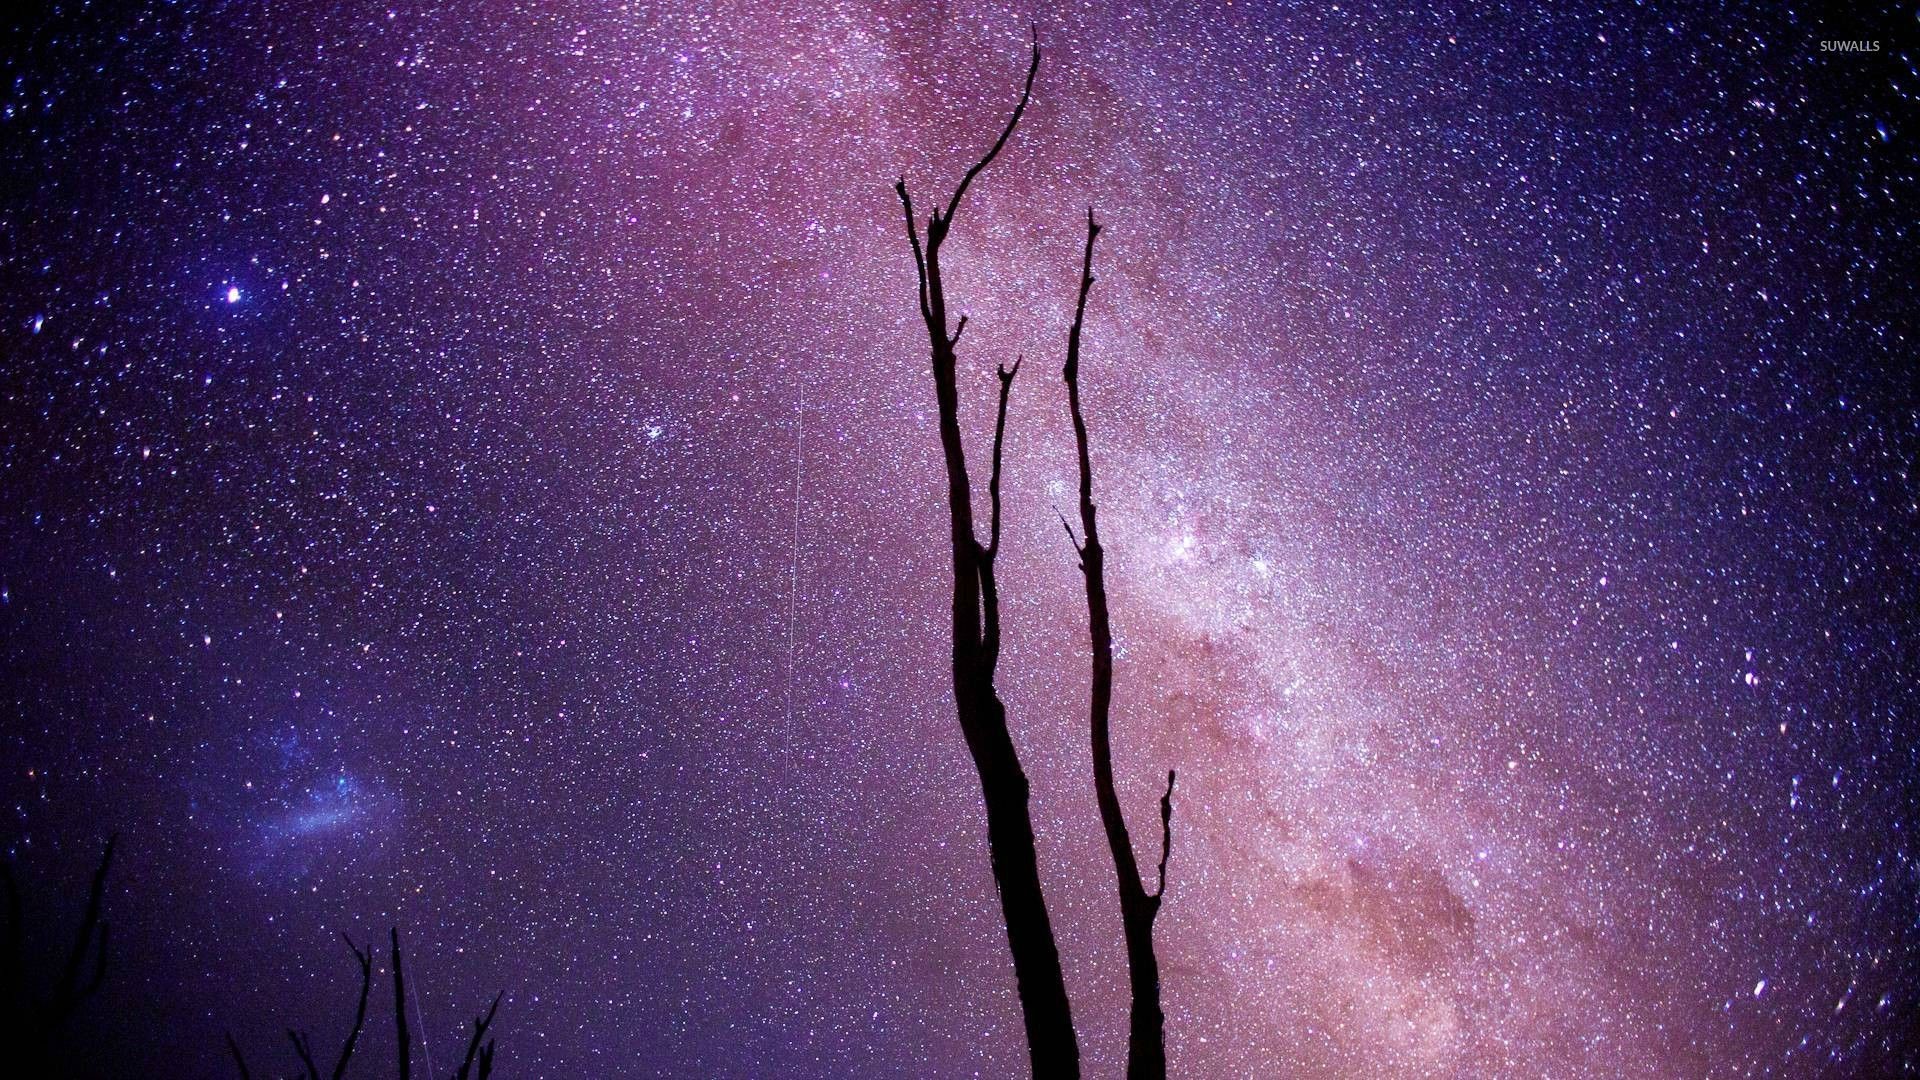 Milky Way above the trees wallpaper jpg